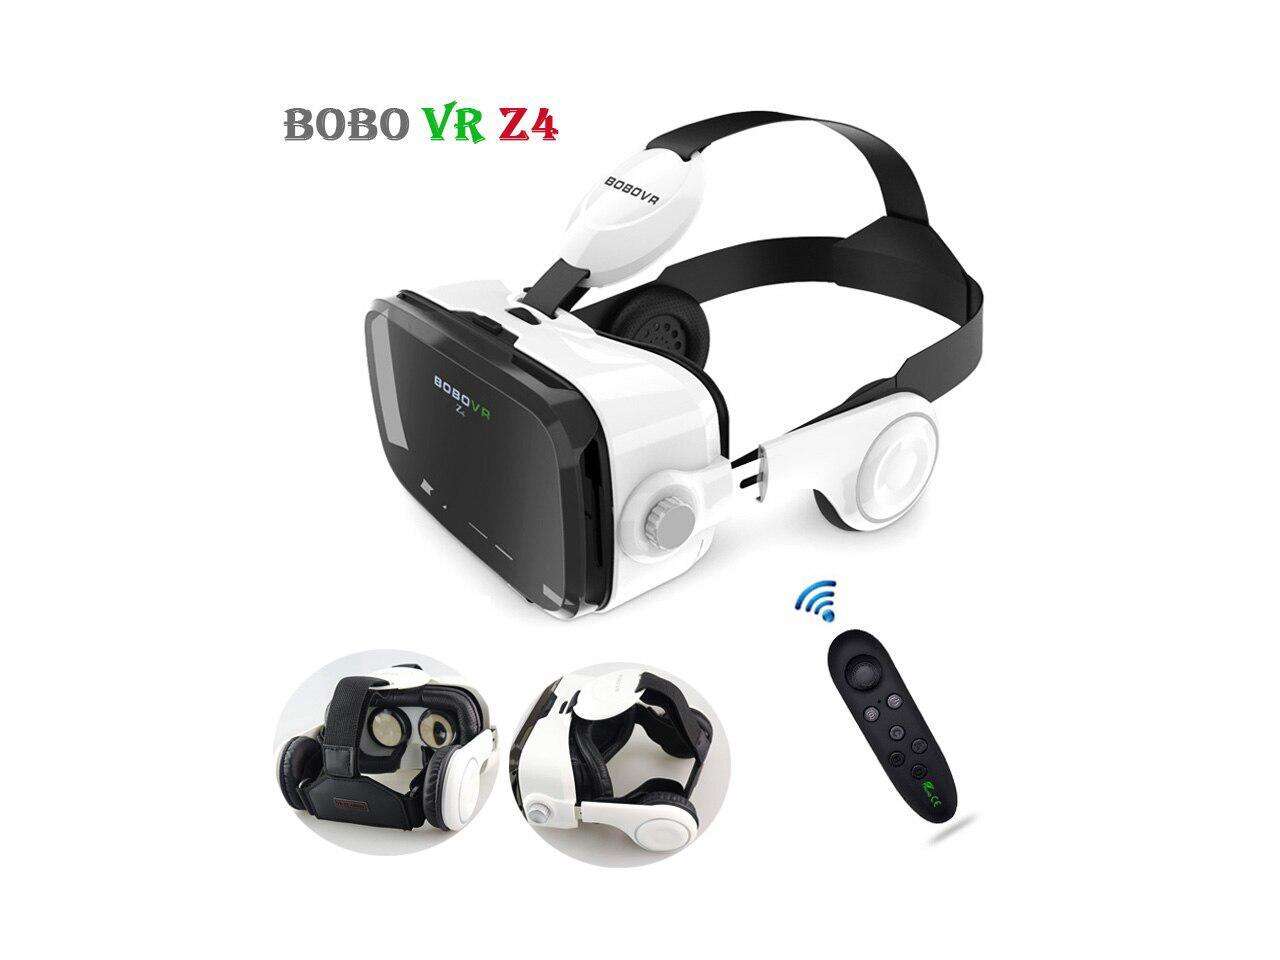 HISPETECH Original BOBOVR Z4 VR Headset 120 FOV 3D VR Glasses Virtual Reality Headset Stereo Box with Remote Control VR Cardboard Helmet for Android Smartphone 4-6'